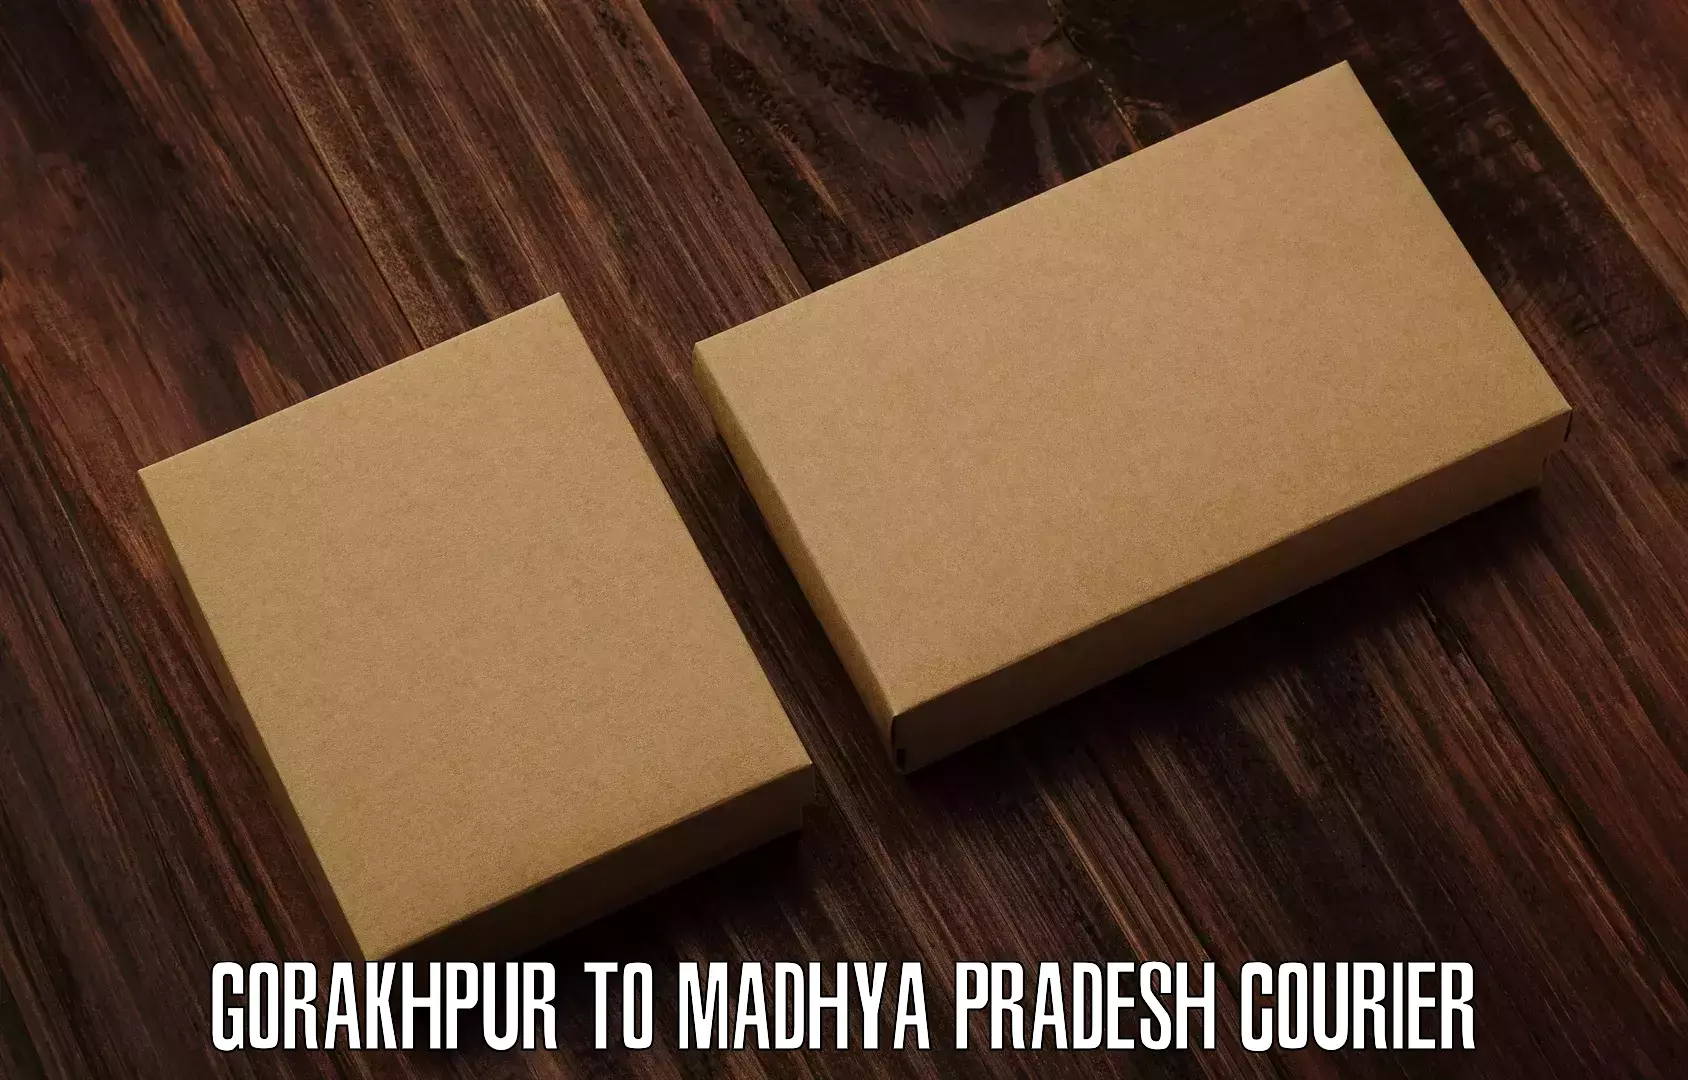 Global courier networks Gorakhpur to Madhya Pradesh